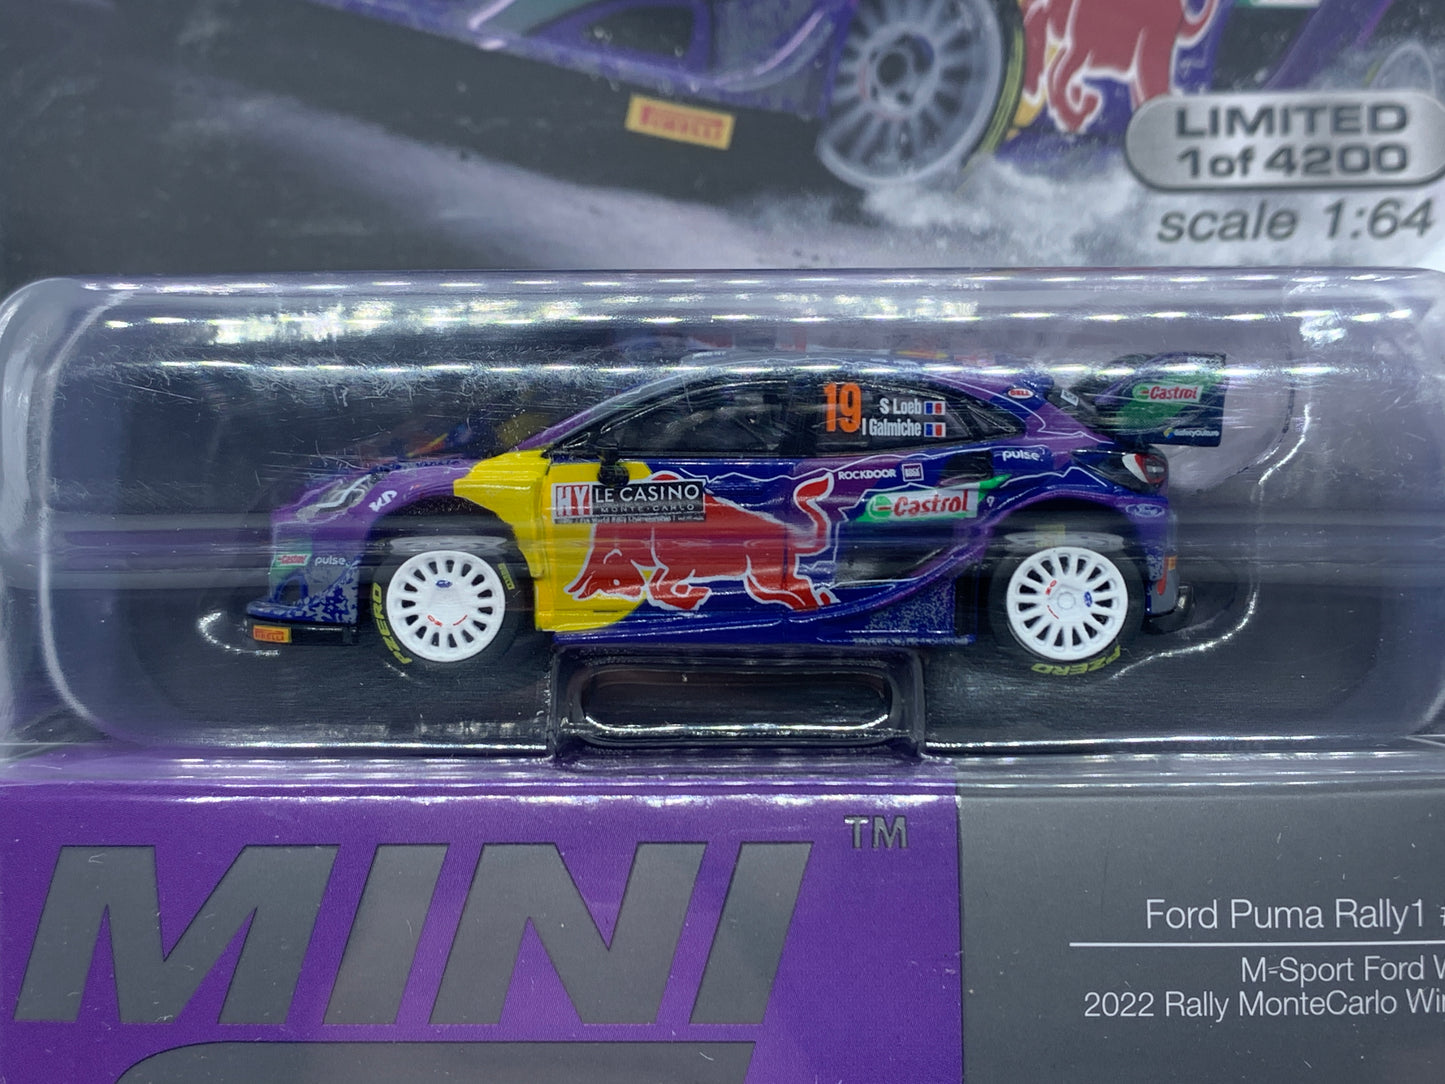 MINI GT - Ford Racing Puma WRC - Display Blister Packaging